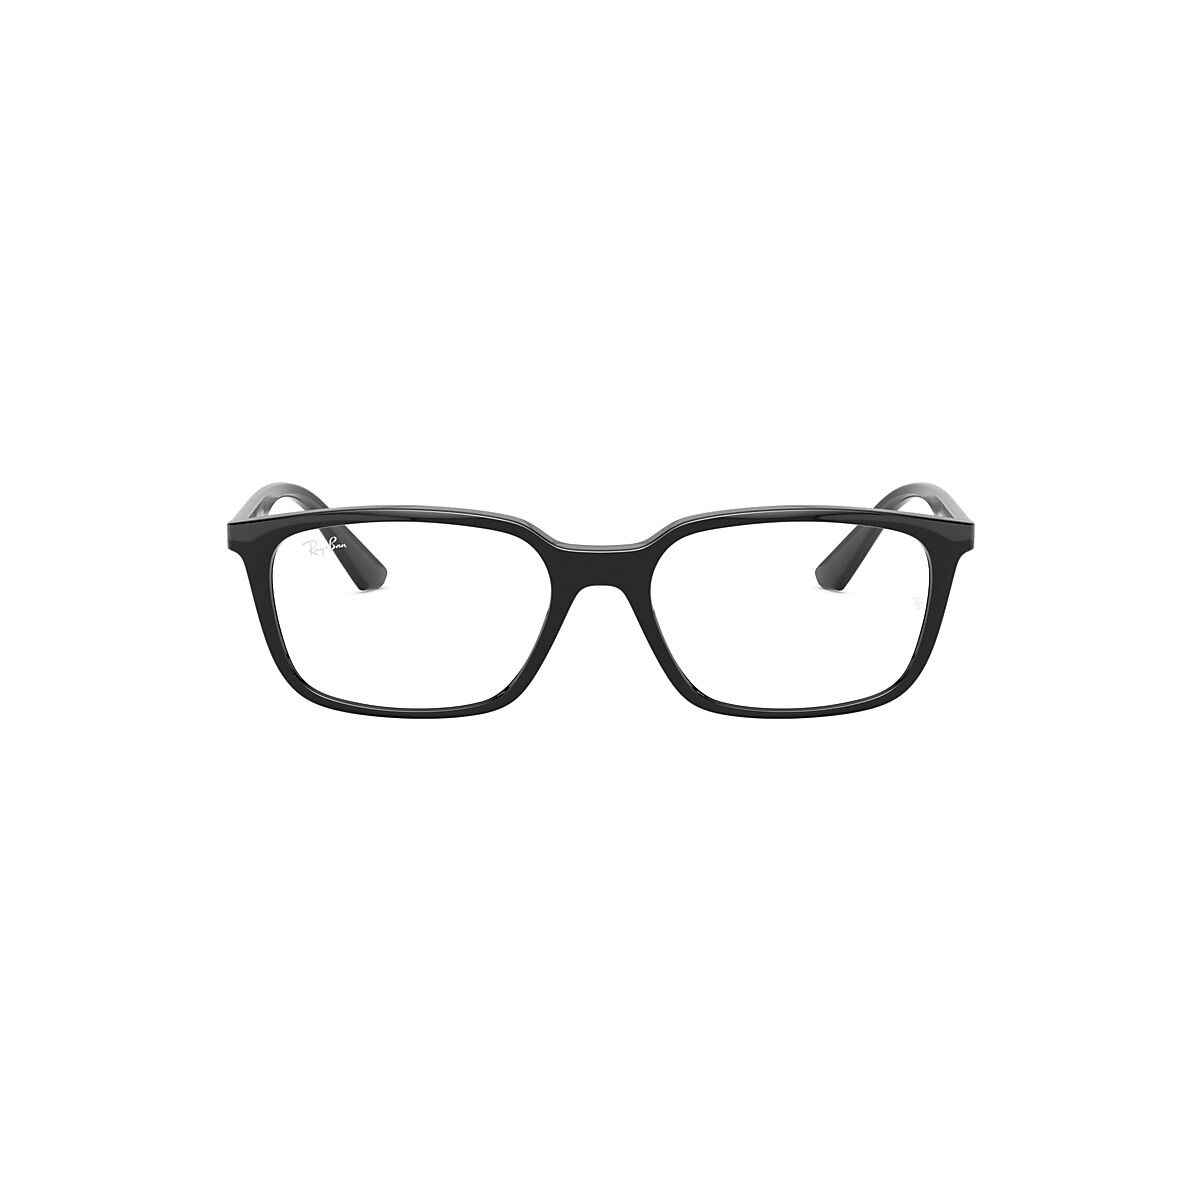 Rb7176 Optics Eyeglasses with Black Frame | Ray-Ban®